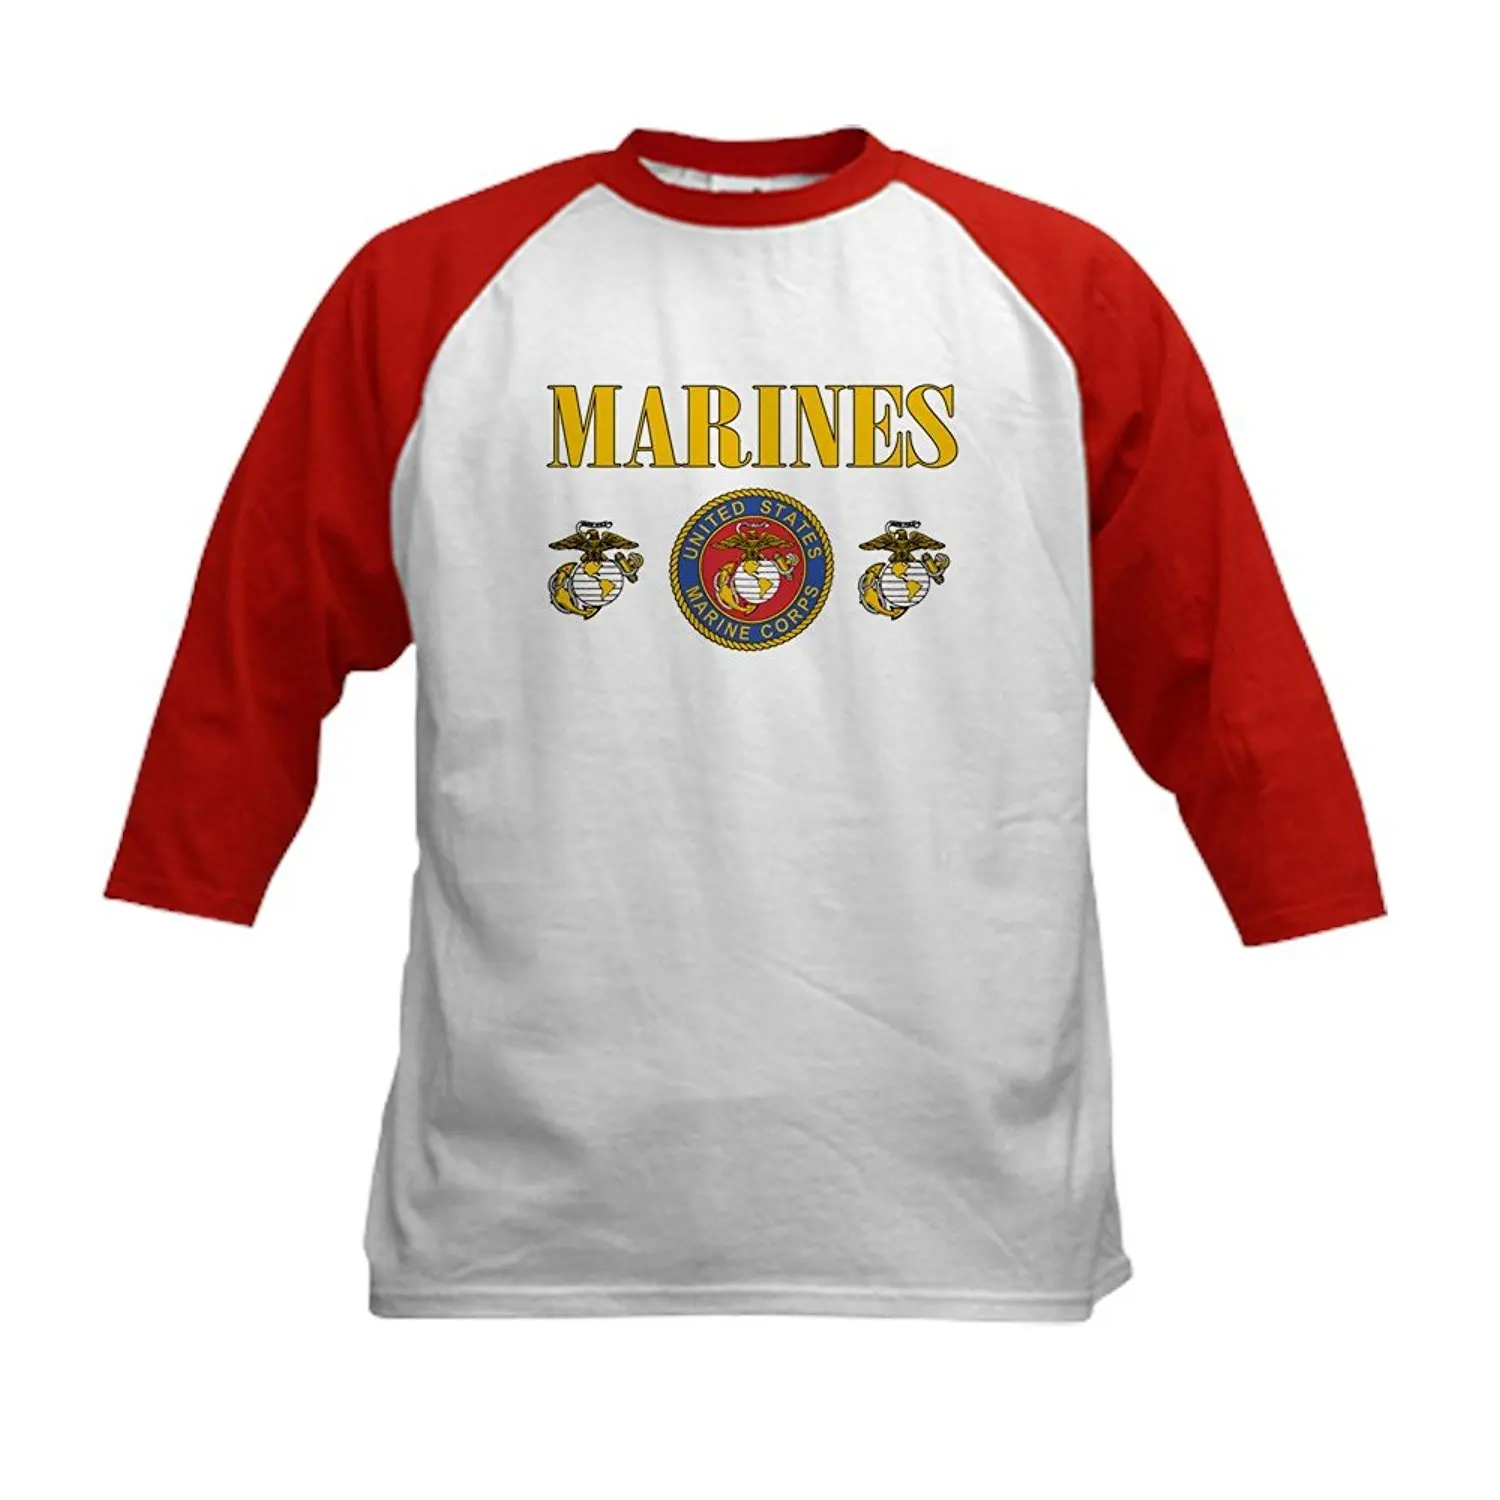 marines baseball jersey